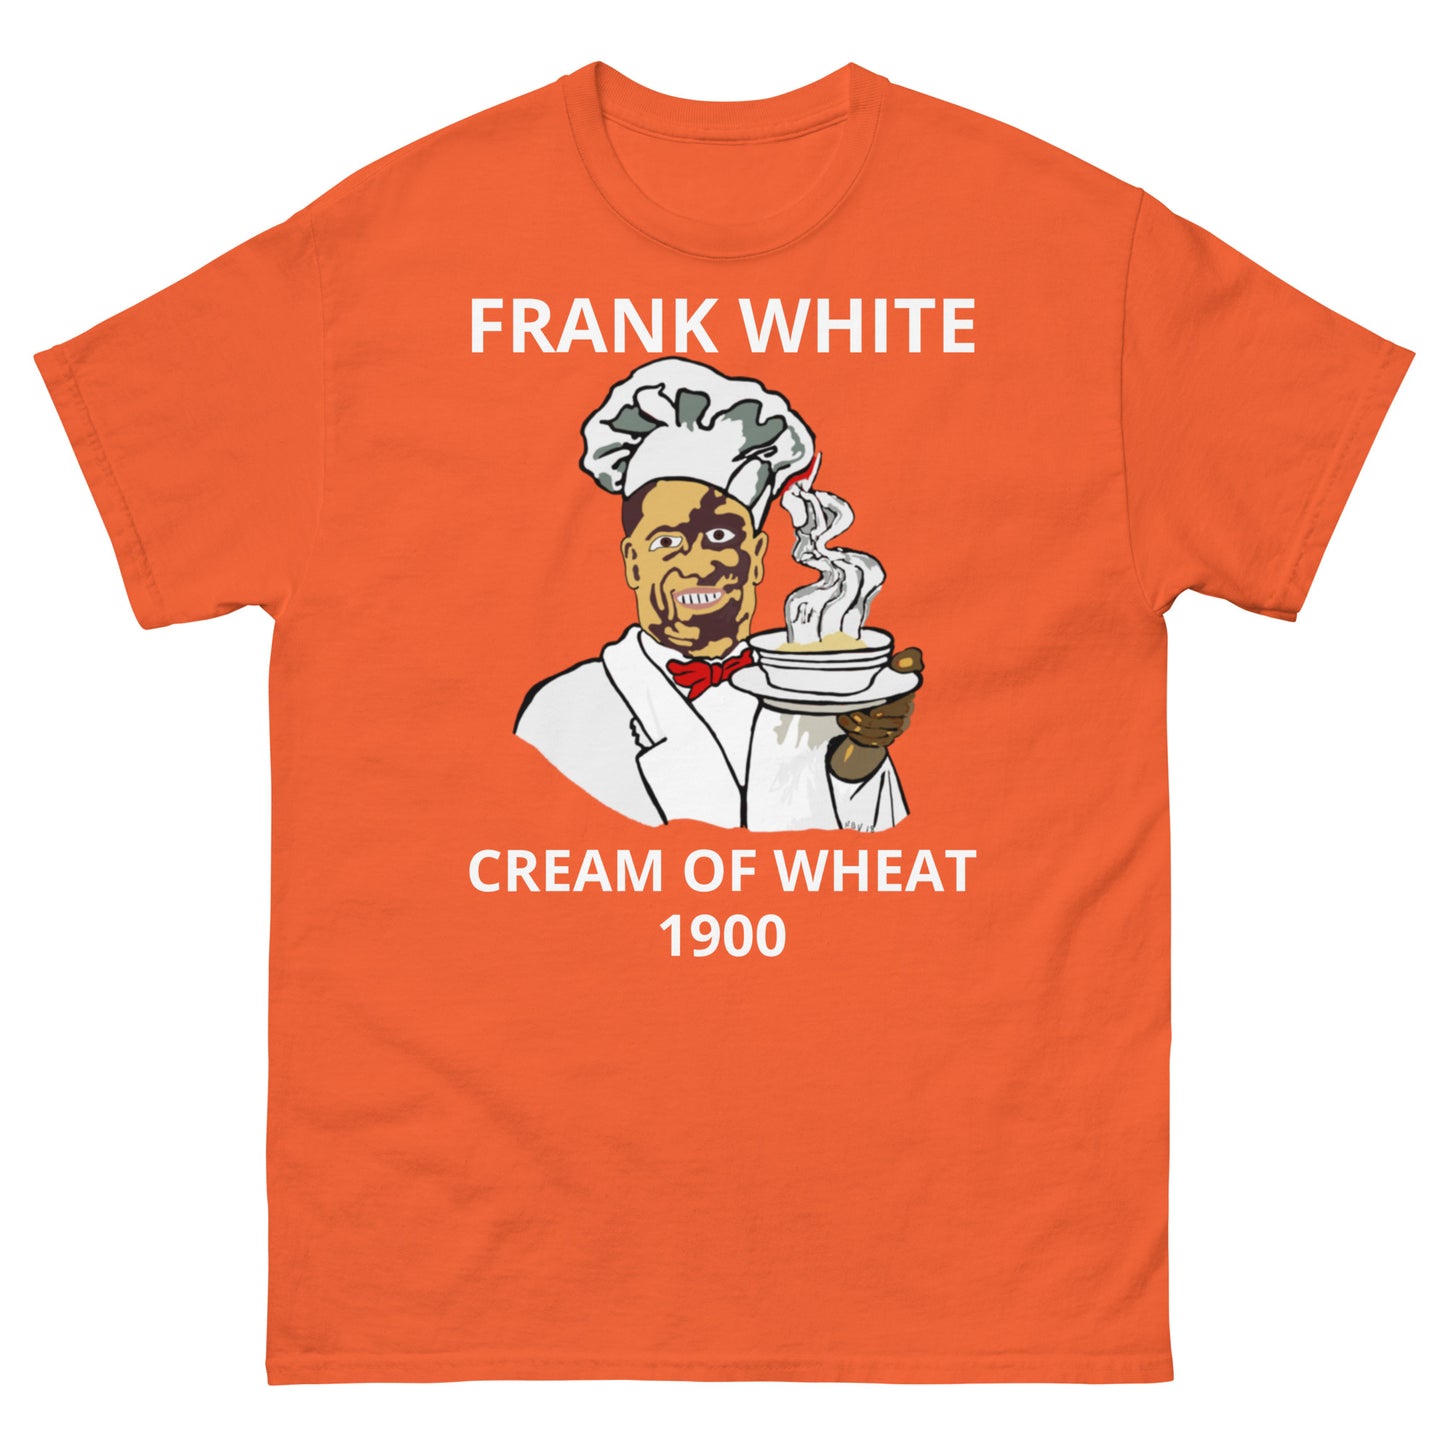 FRANK WHITE Men's classic tee